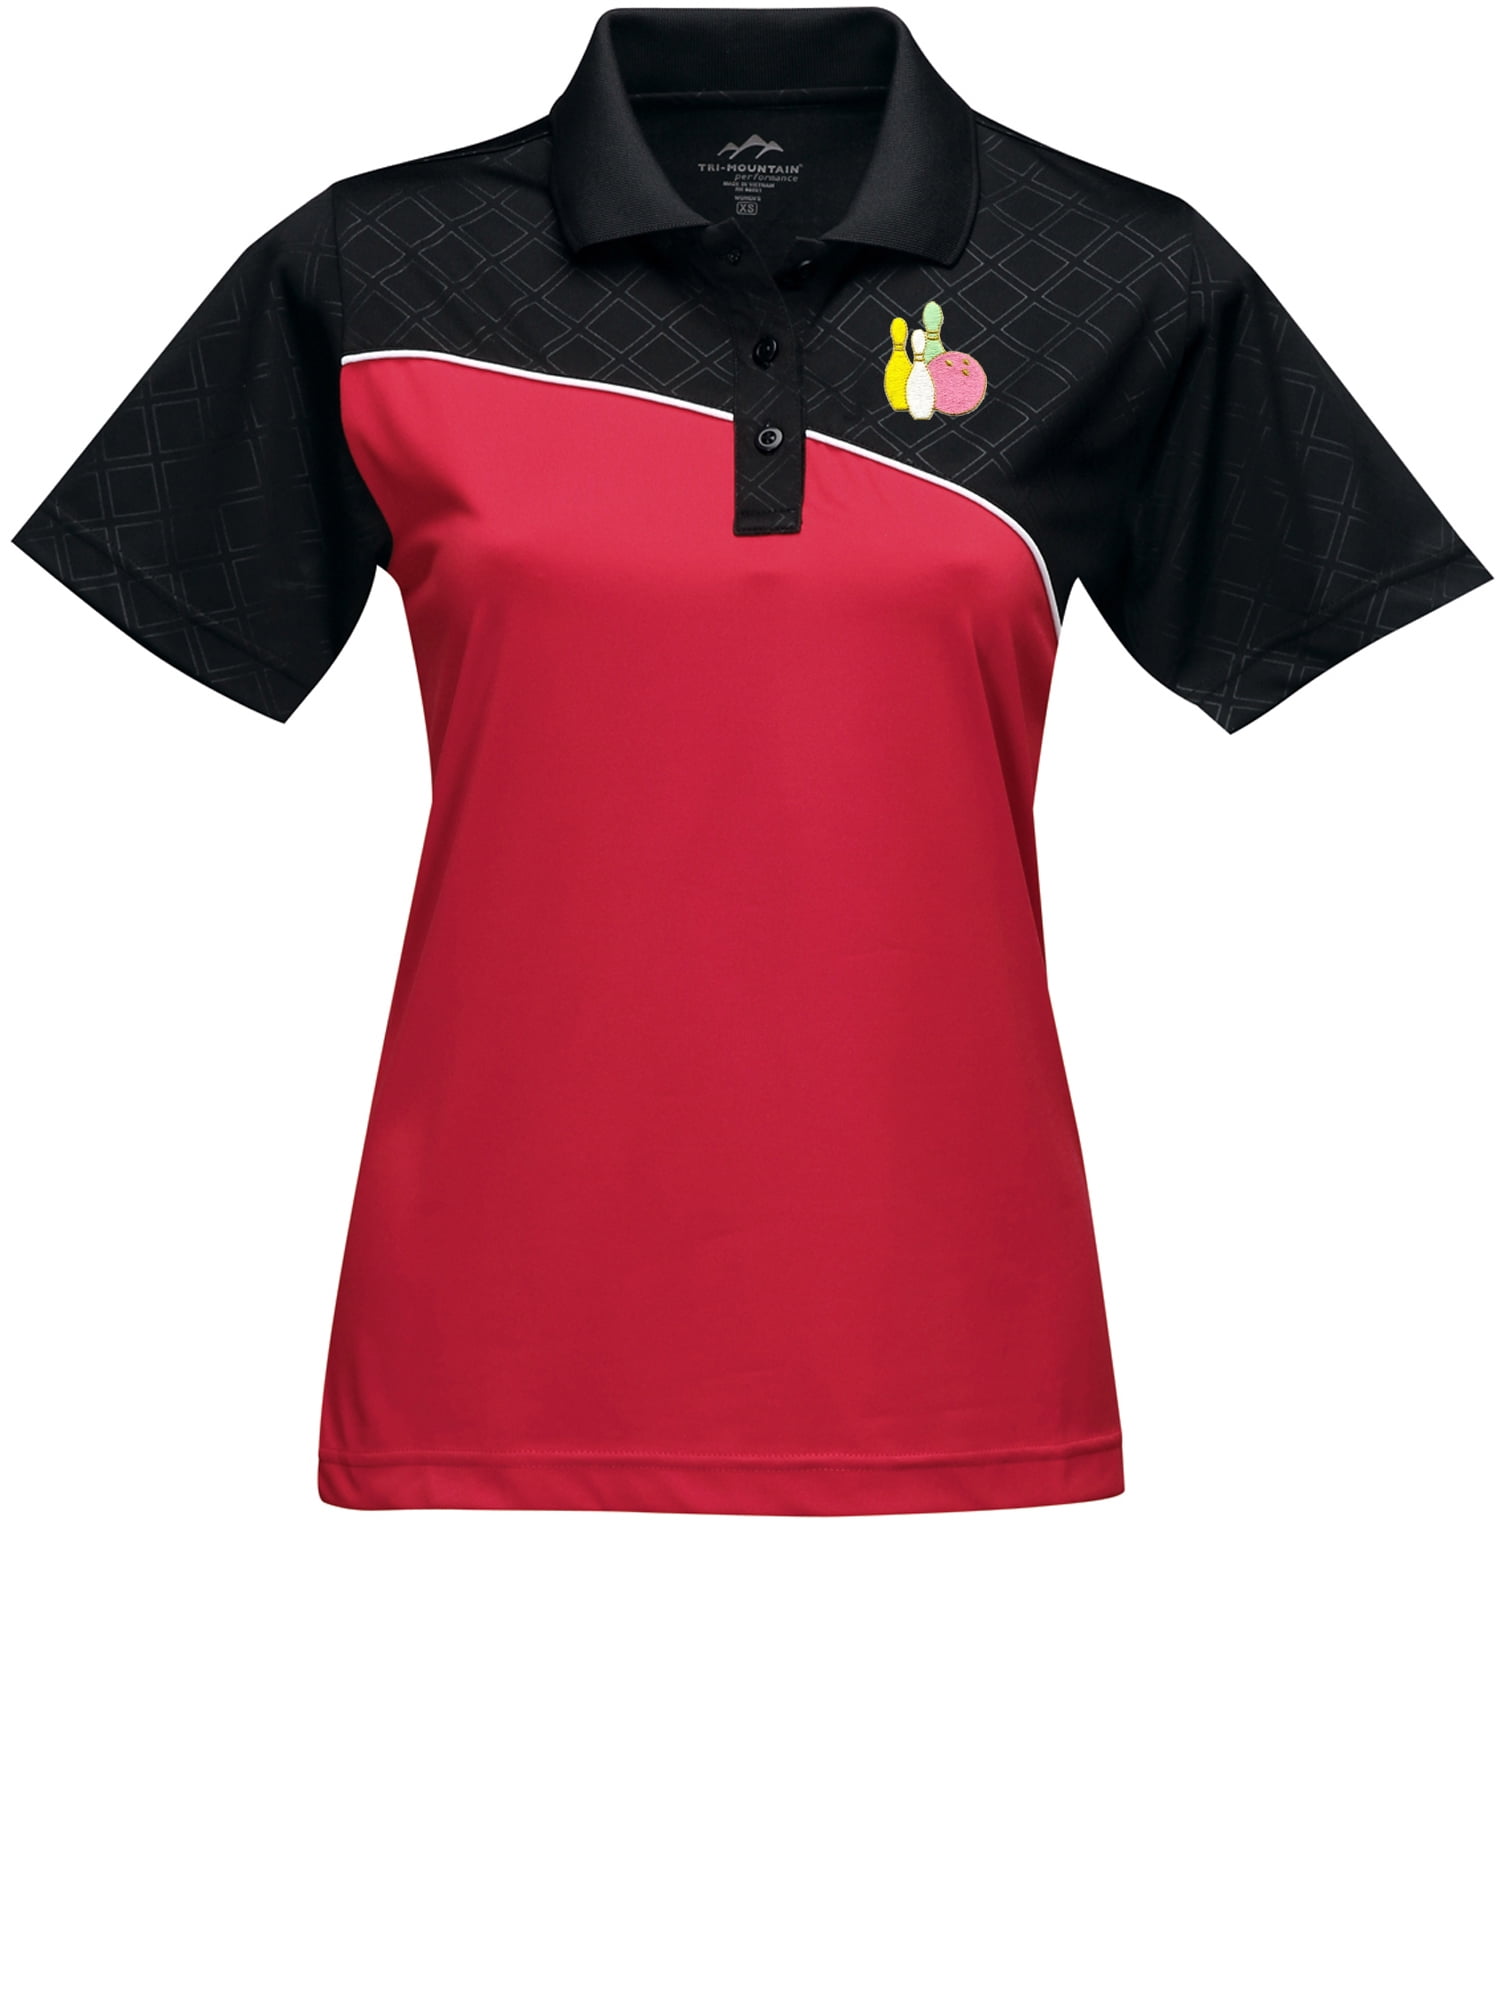 Polo Shirt - Red/Black/White, XL 